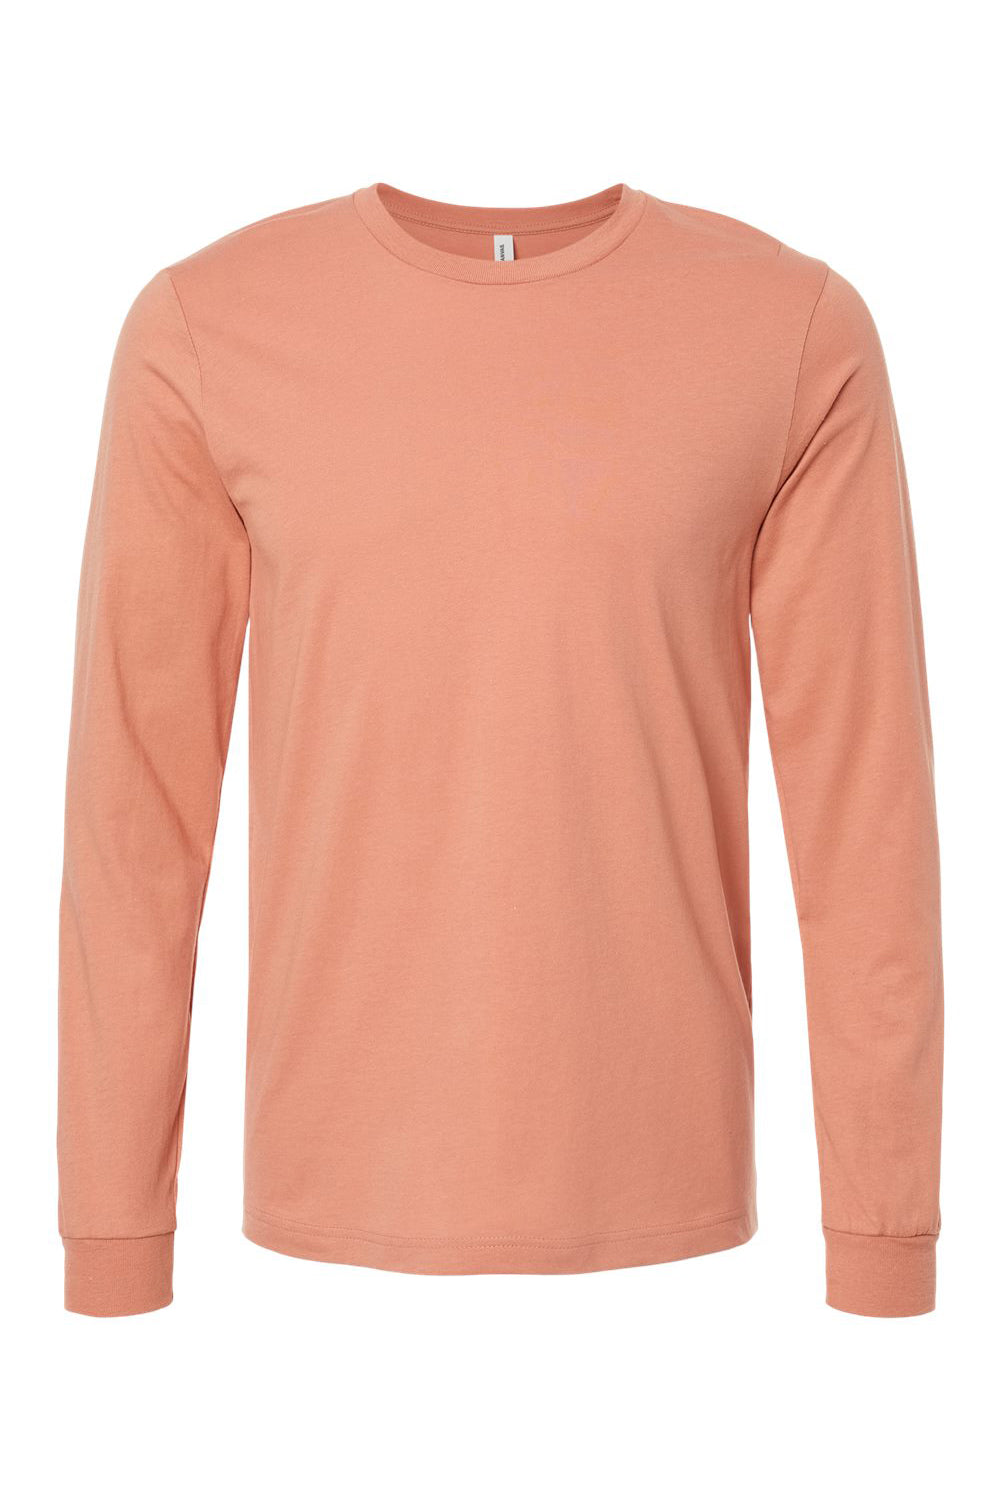 Bella + Canvas BC3501/3501 Mens Jersey Long Sleeve Crewneck T-Shirt Terracotta Flat Front